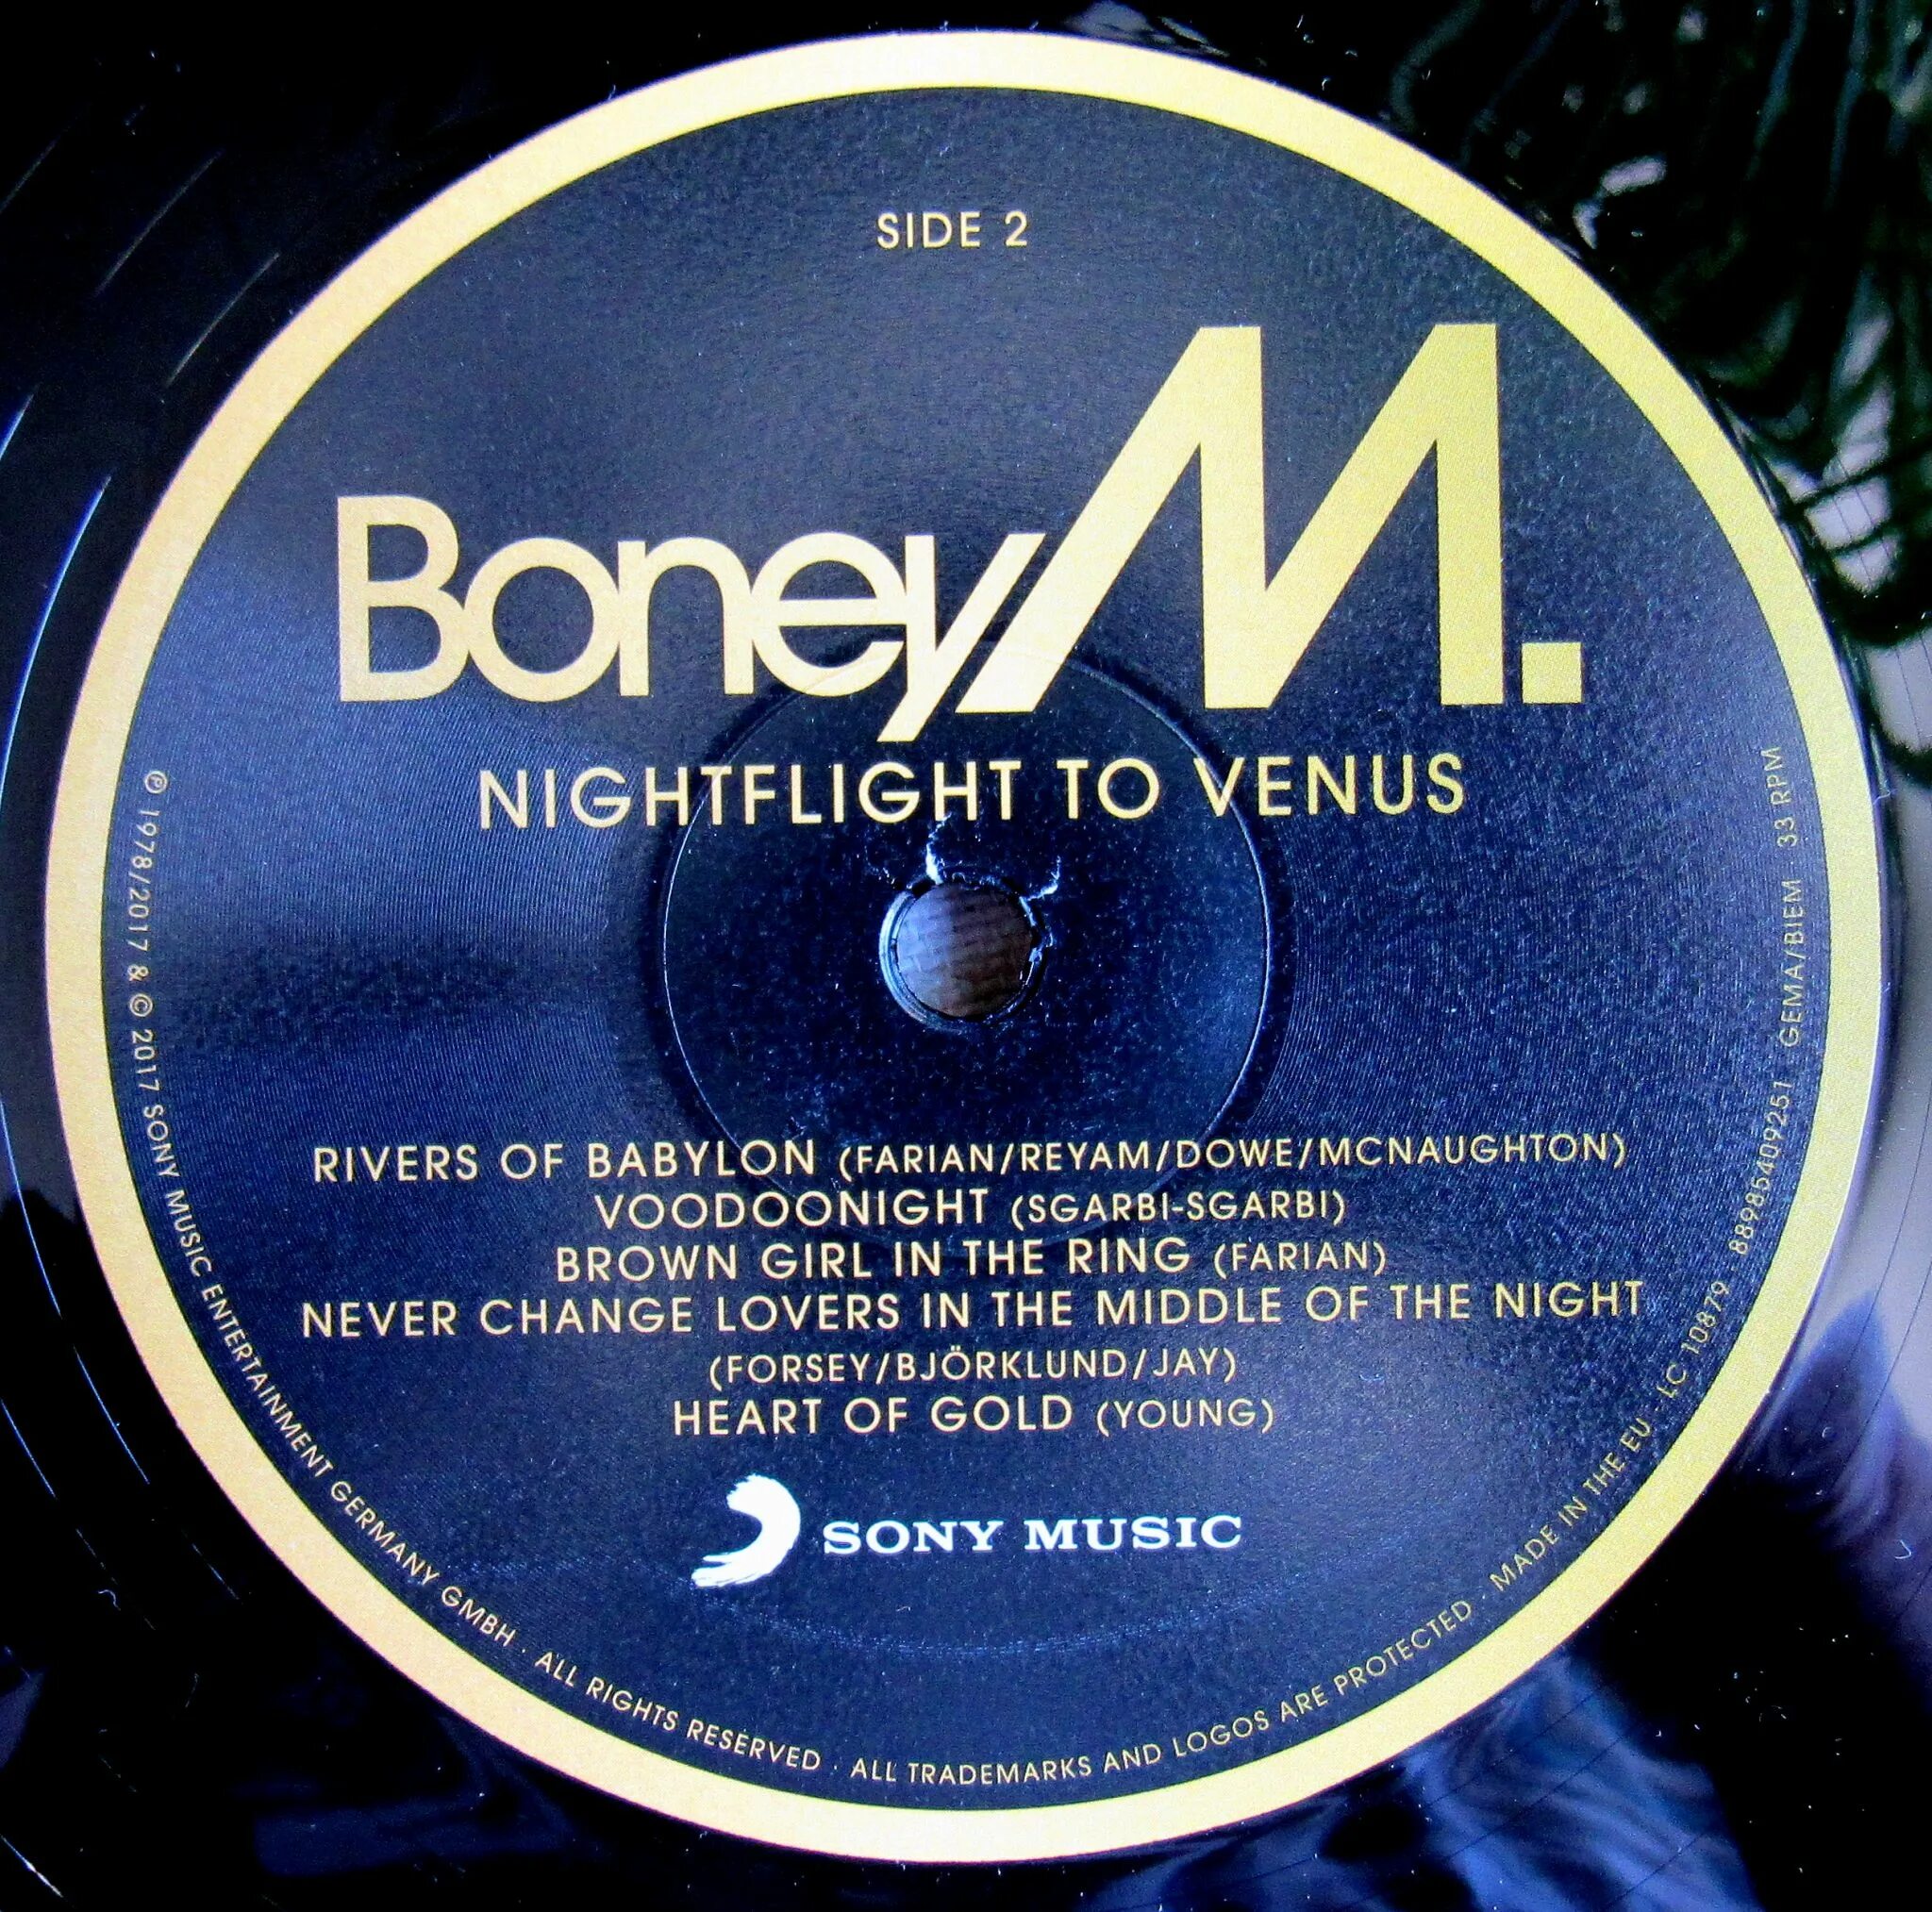 Boney m nightflight. 1978 - Nightflight to Venus. Пластинка Boney m Nightflight to Venus. Boney m Nightflight to Venus 1978. 0889854092511, Виниловая пластинка Boney m., Nightflight to Venus (0889854092511).